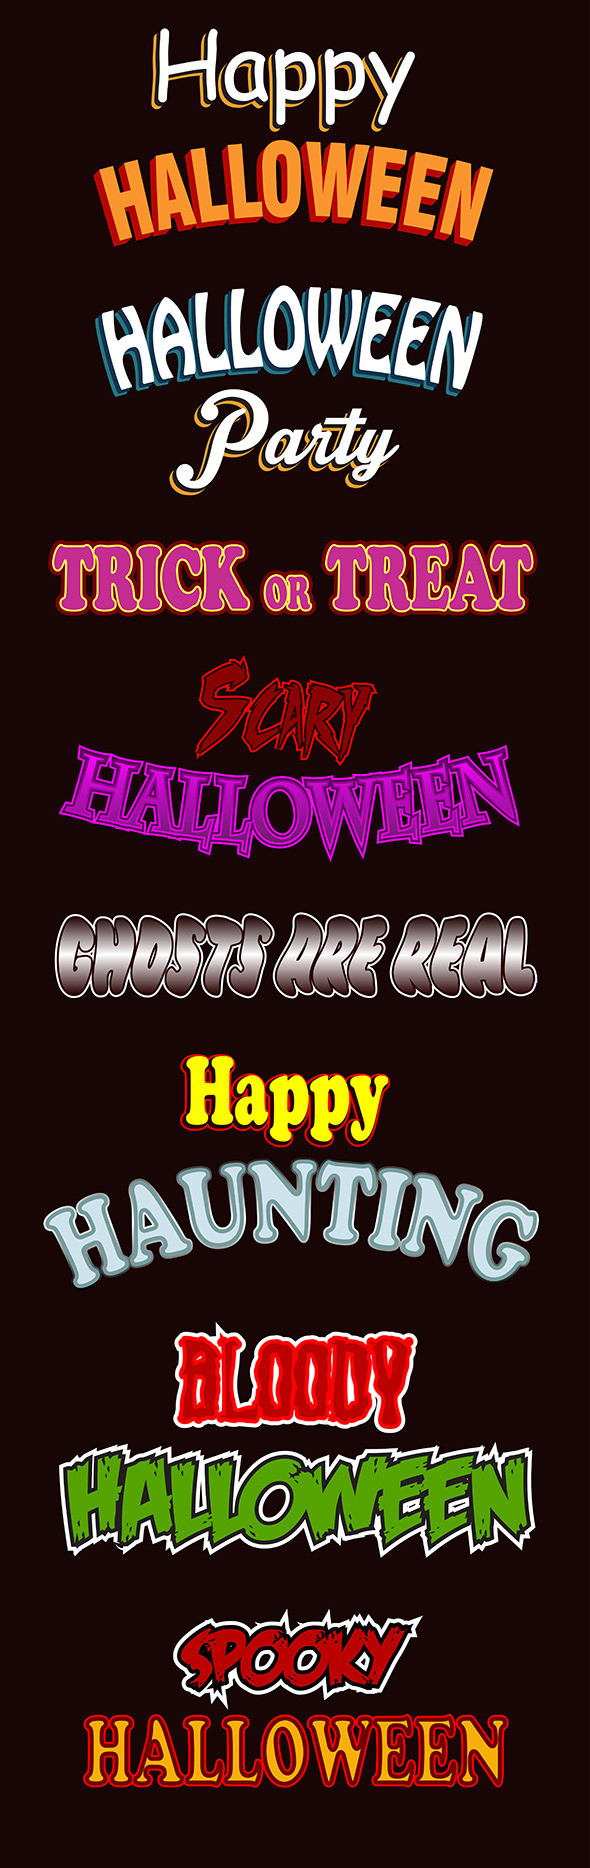 Halloween text styles cs3